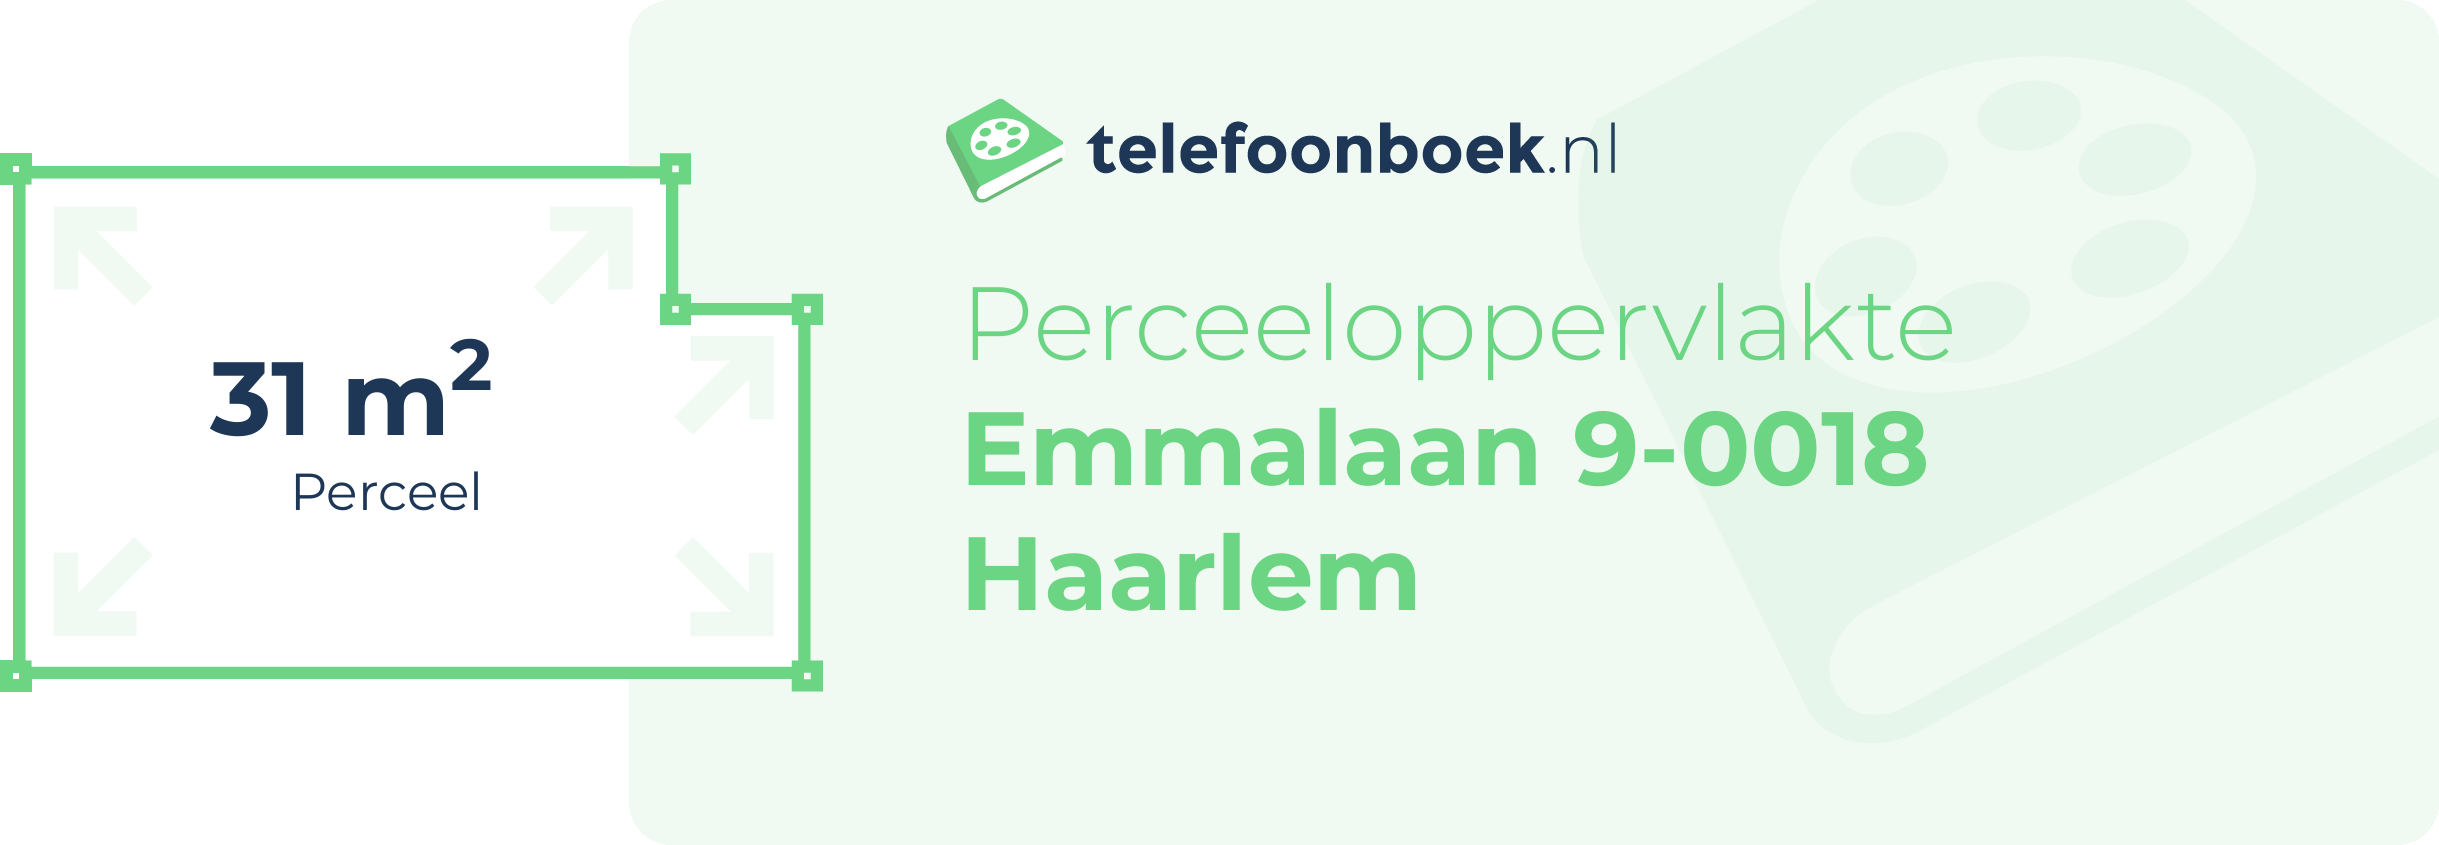 Perceeloppervlakte Emmalaan 9-0018 Haarlem